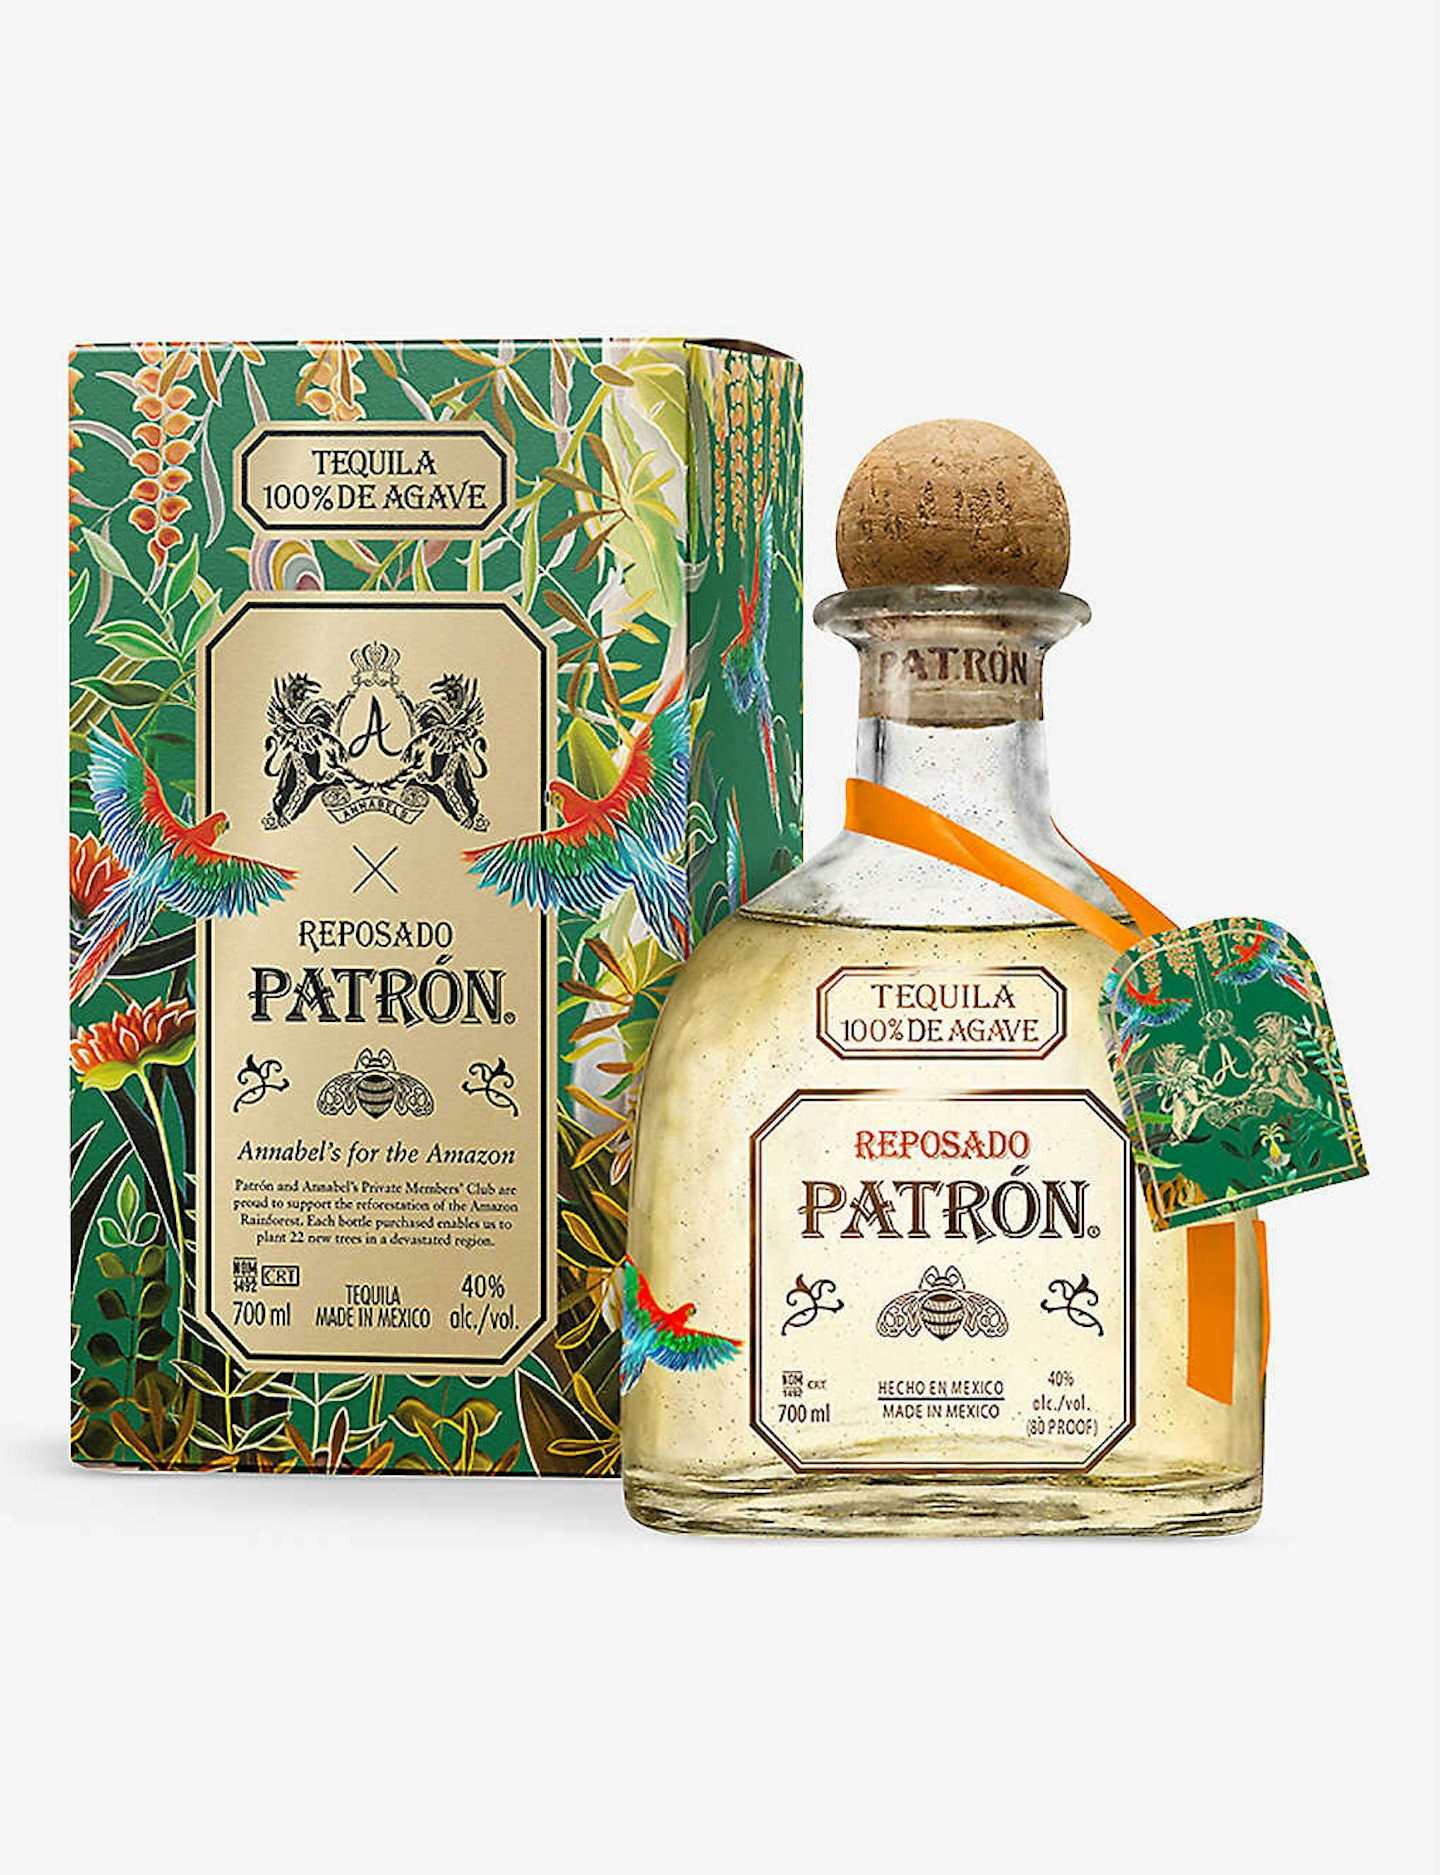 PATRON, Annabel's x Patru00f3n Reposado limited-edition tequila 700ml, £85